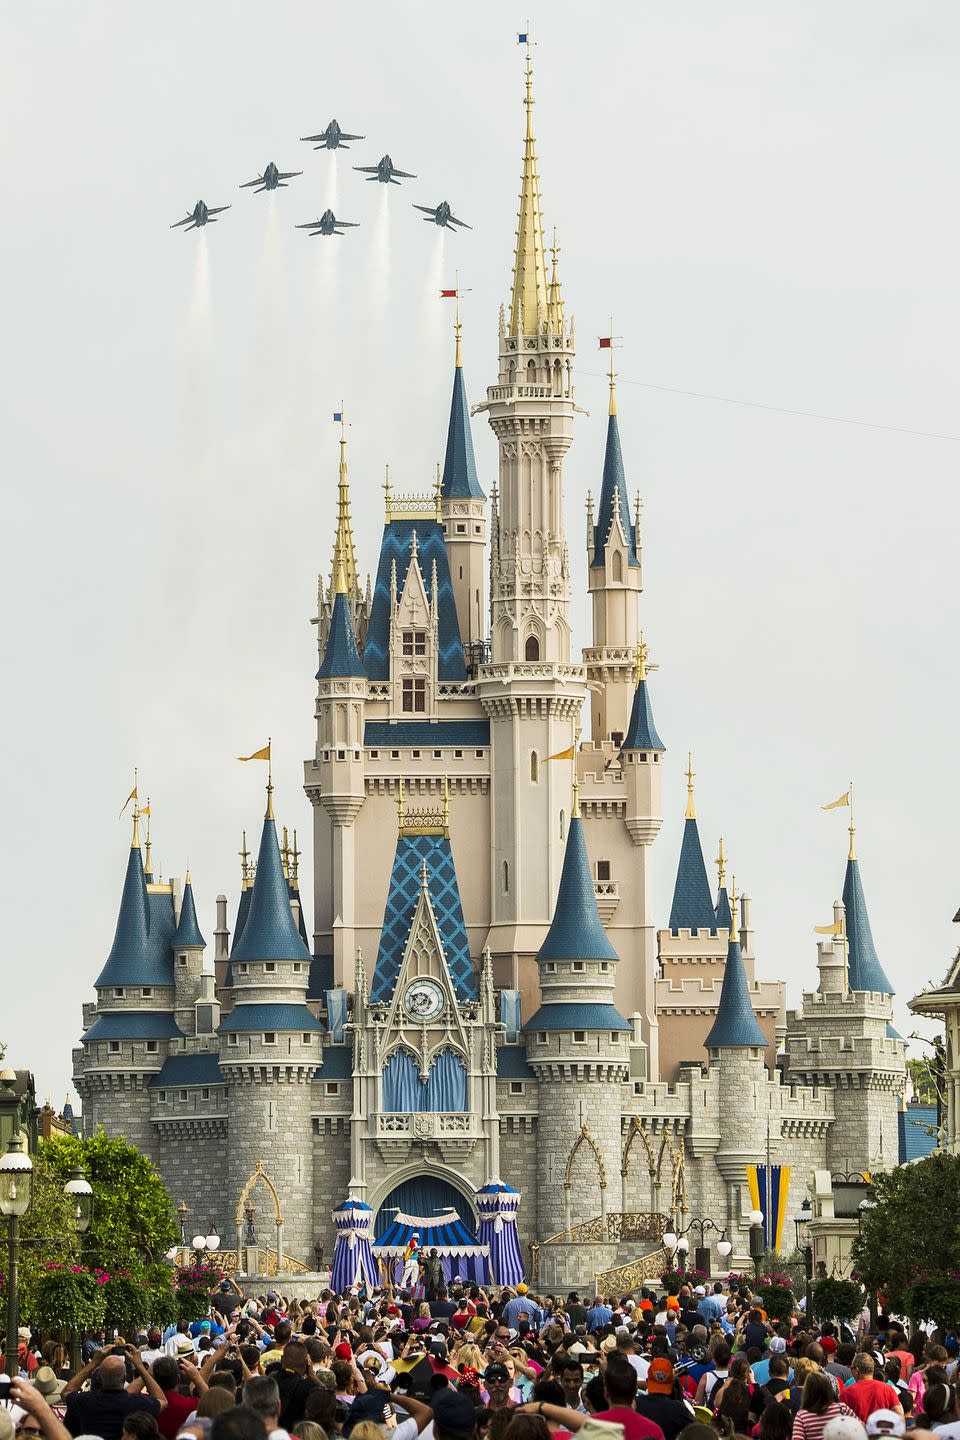 40) Location of Disney World Castle